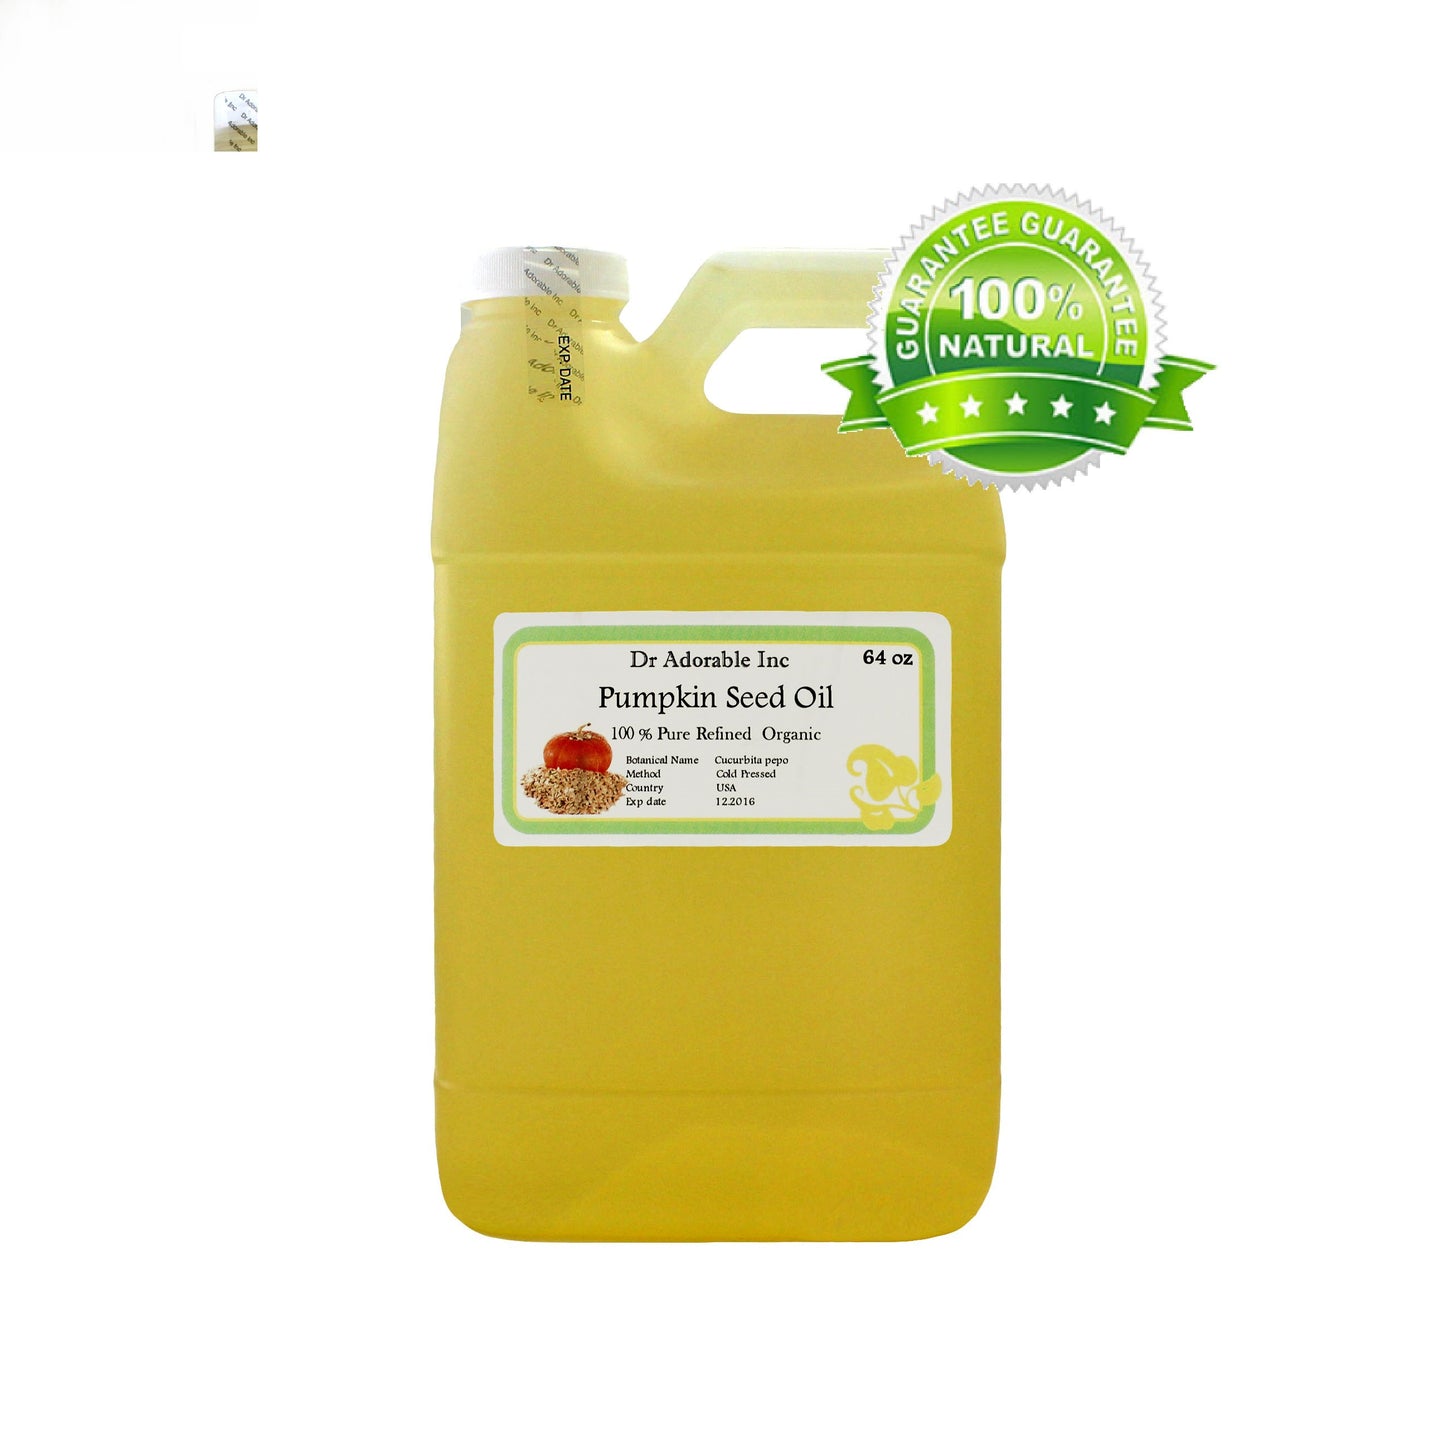 Pumpkin Seed Oil Refined - 100% Pure Natural Premium Organic Cold Pressed